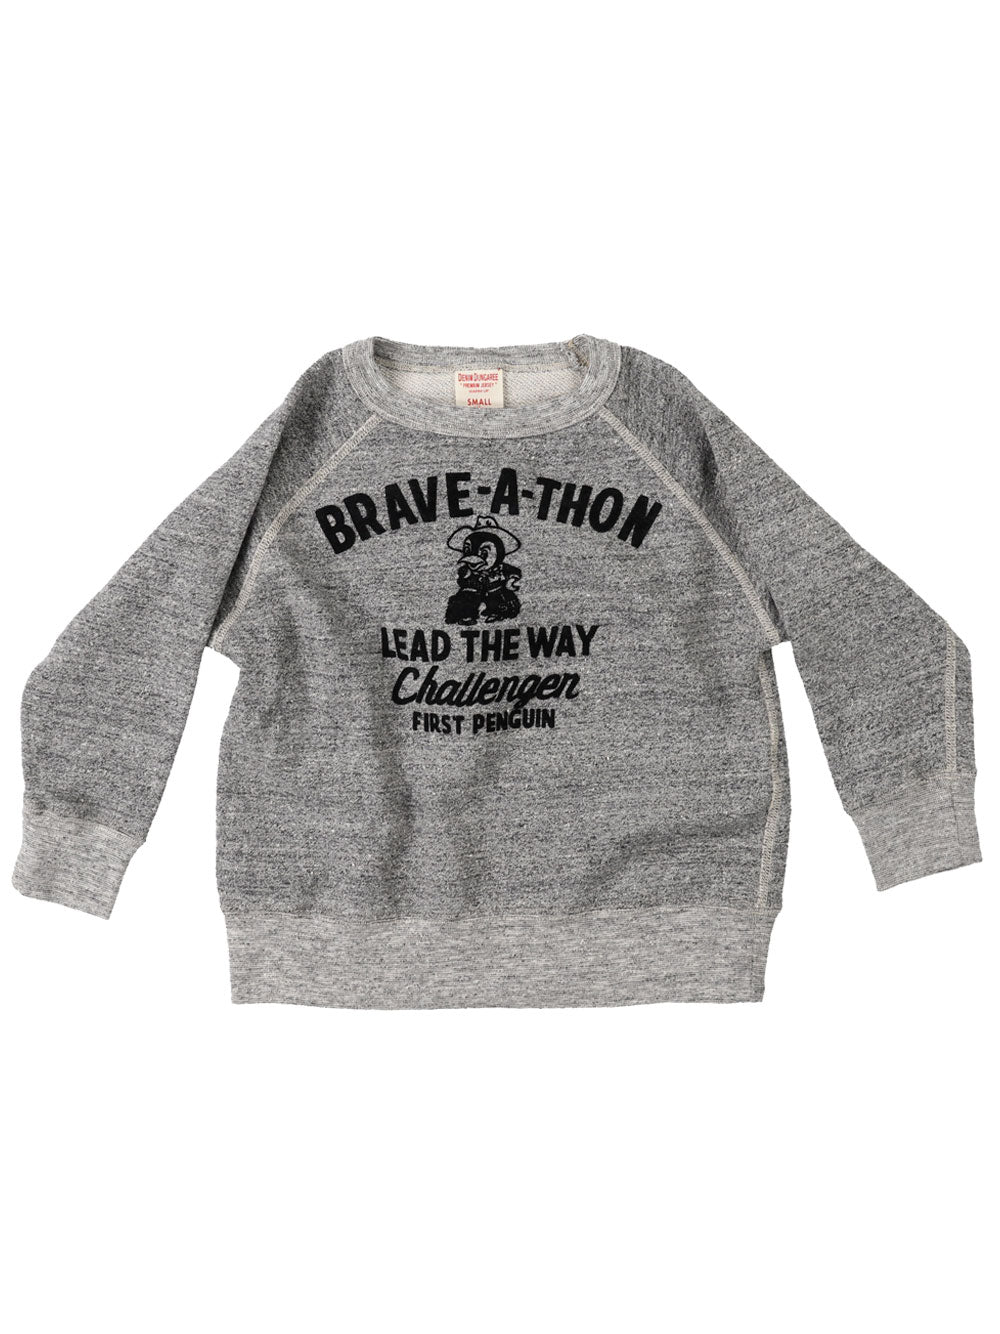 Braveathon Sweatshirt - Shan and Toad - Luxury Kidswear Shop